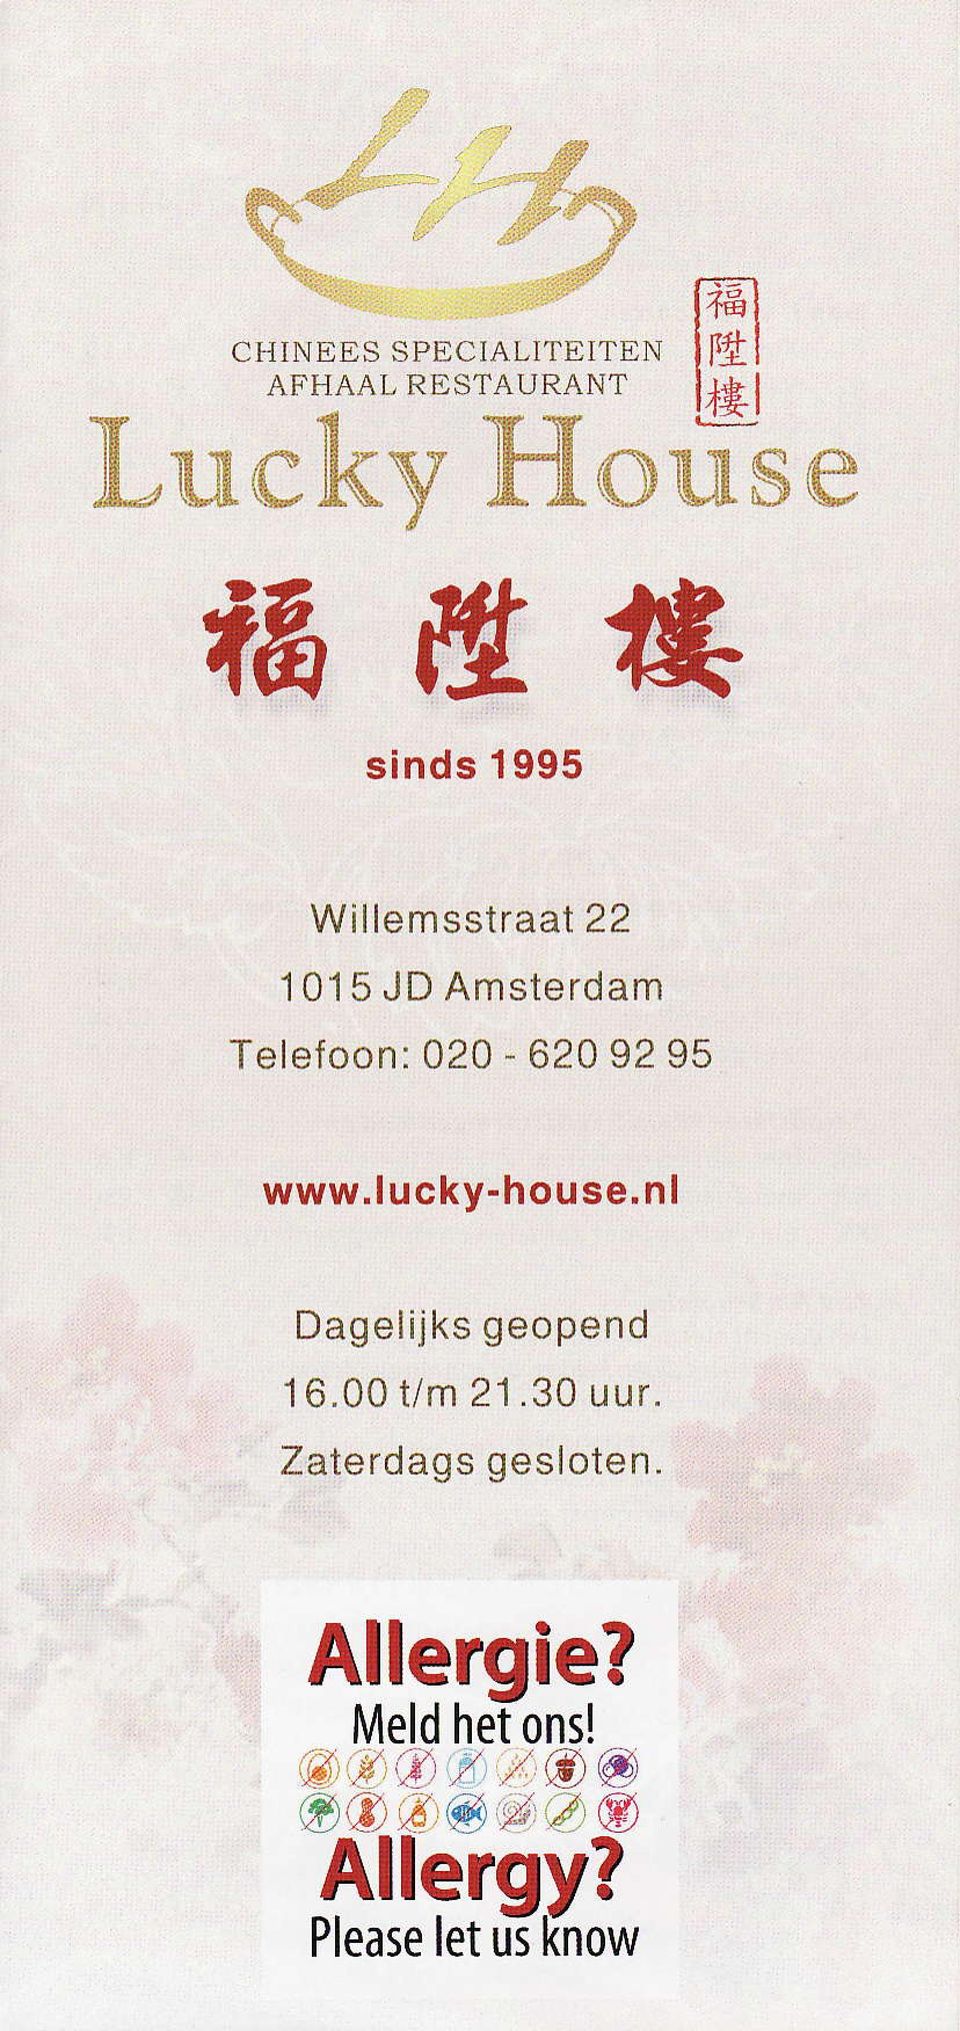 Amsterdam Telefoon:020-6209295 www,lucky-house.